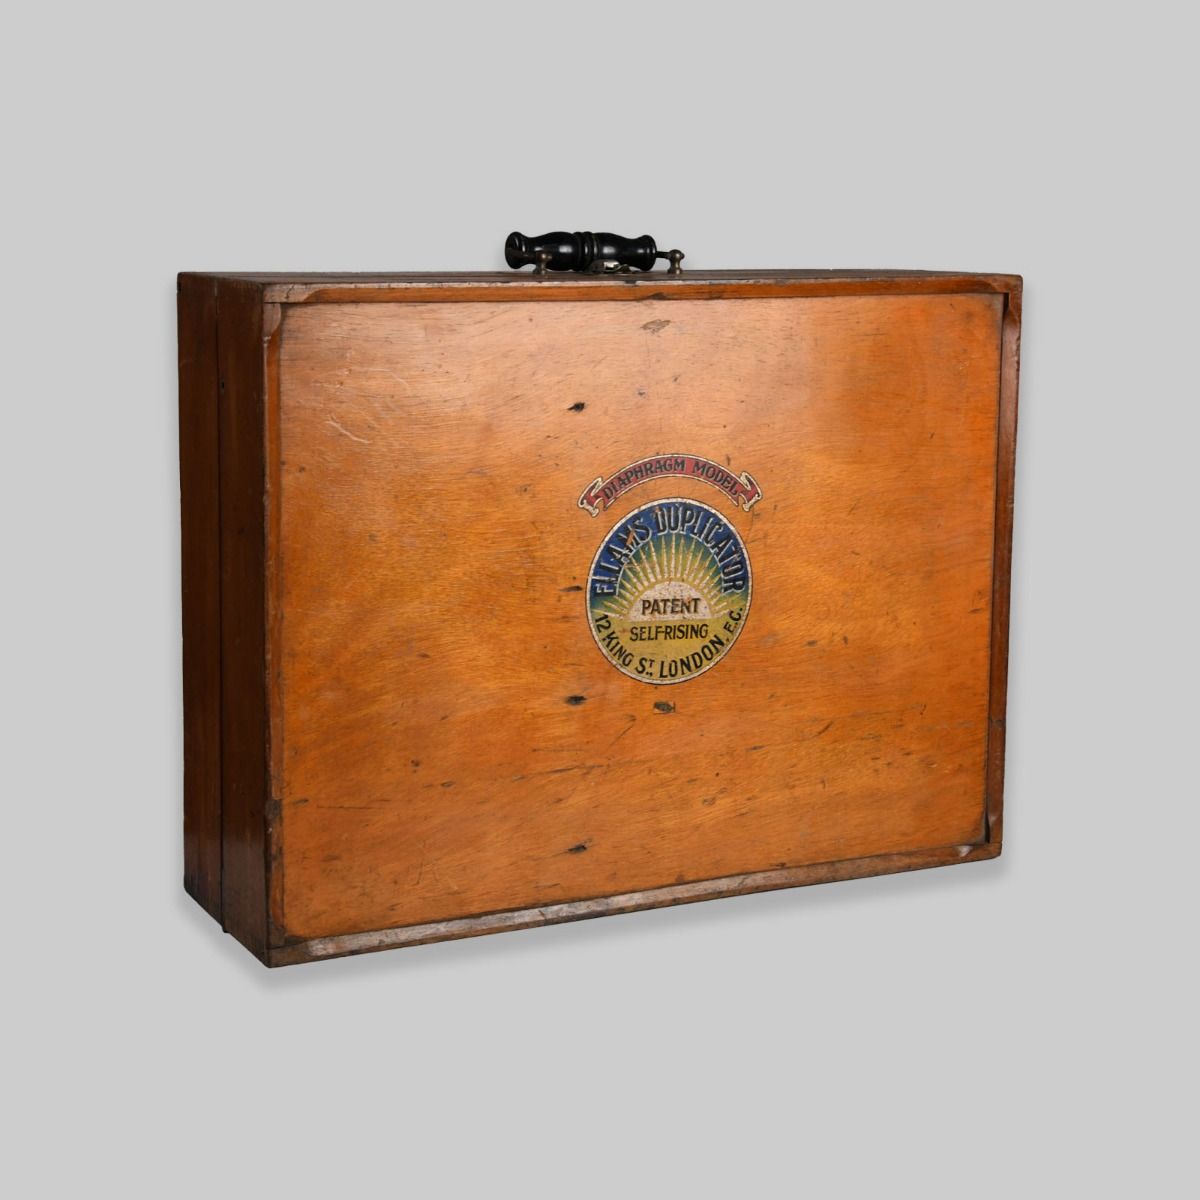 Vintage 1940s 'Ellam's Duplicator' Wooden Box